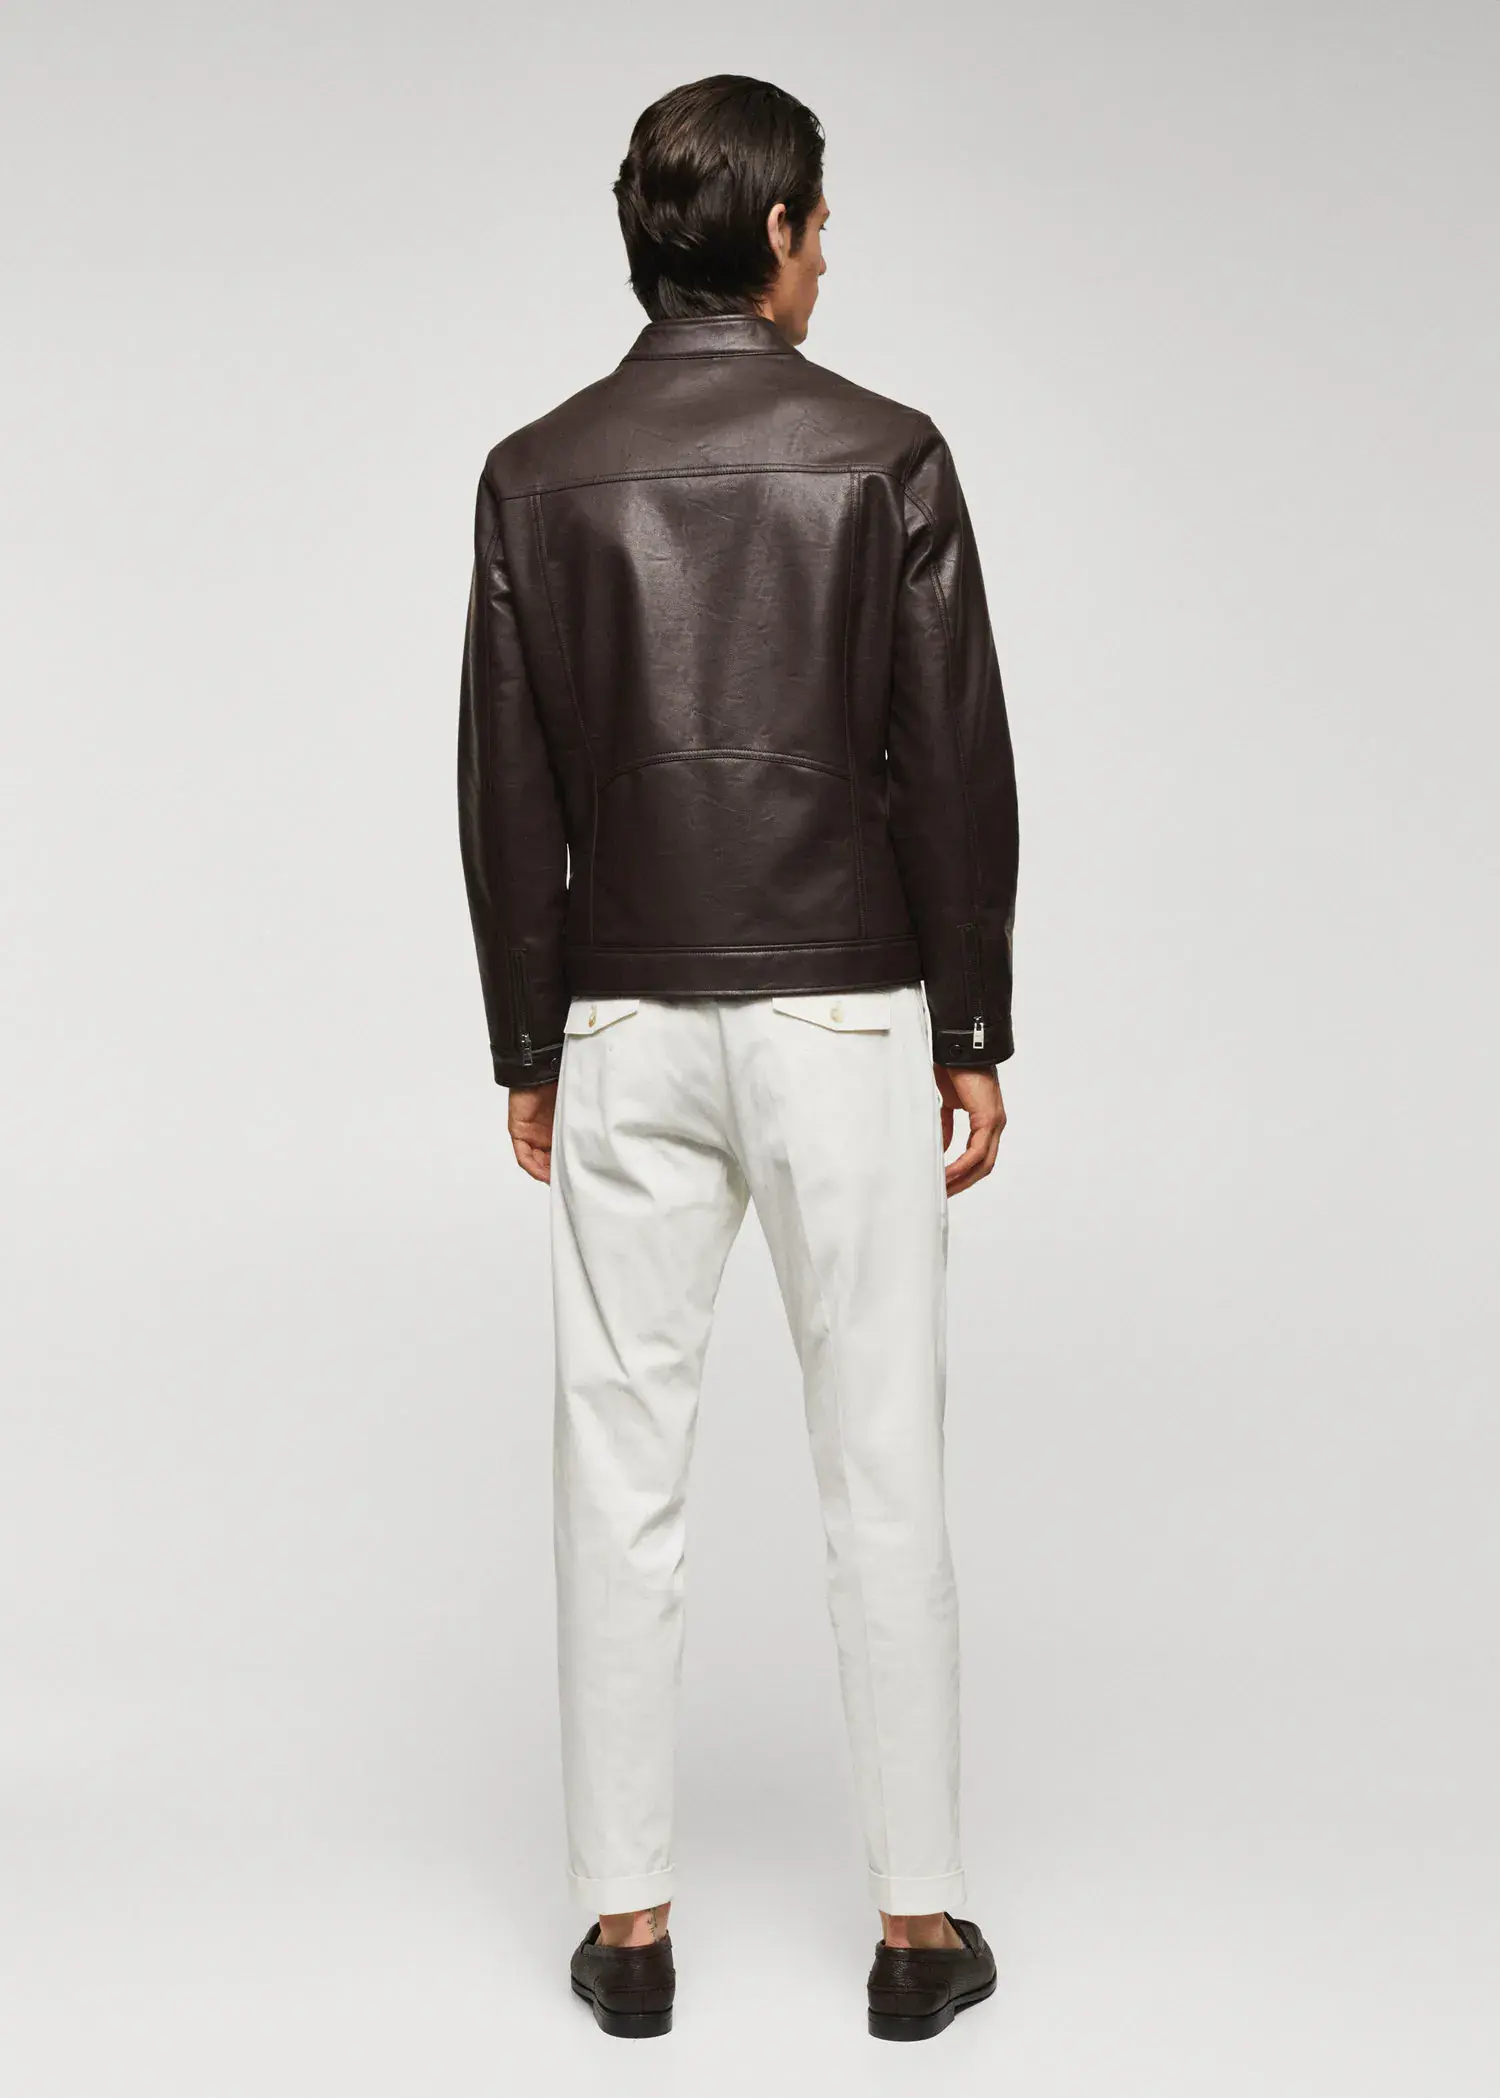 Mango Leather-effect jacket with zips. 3